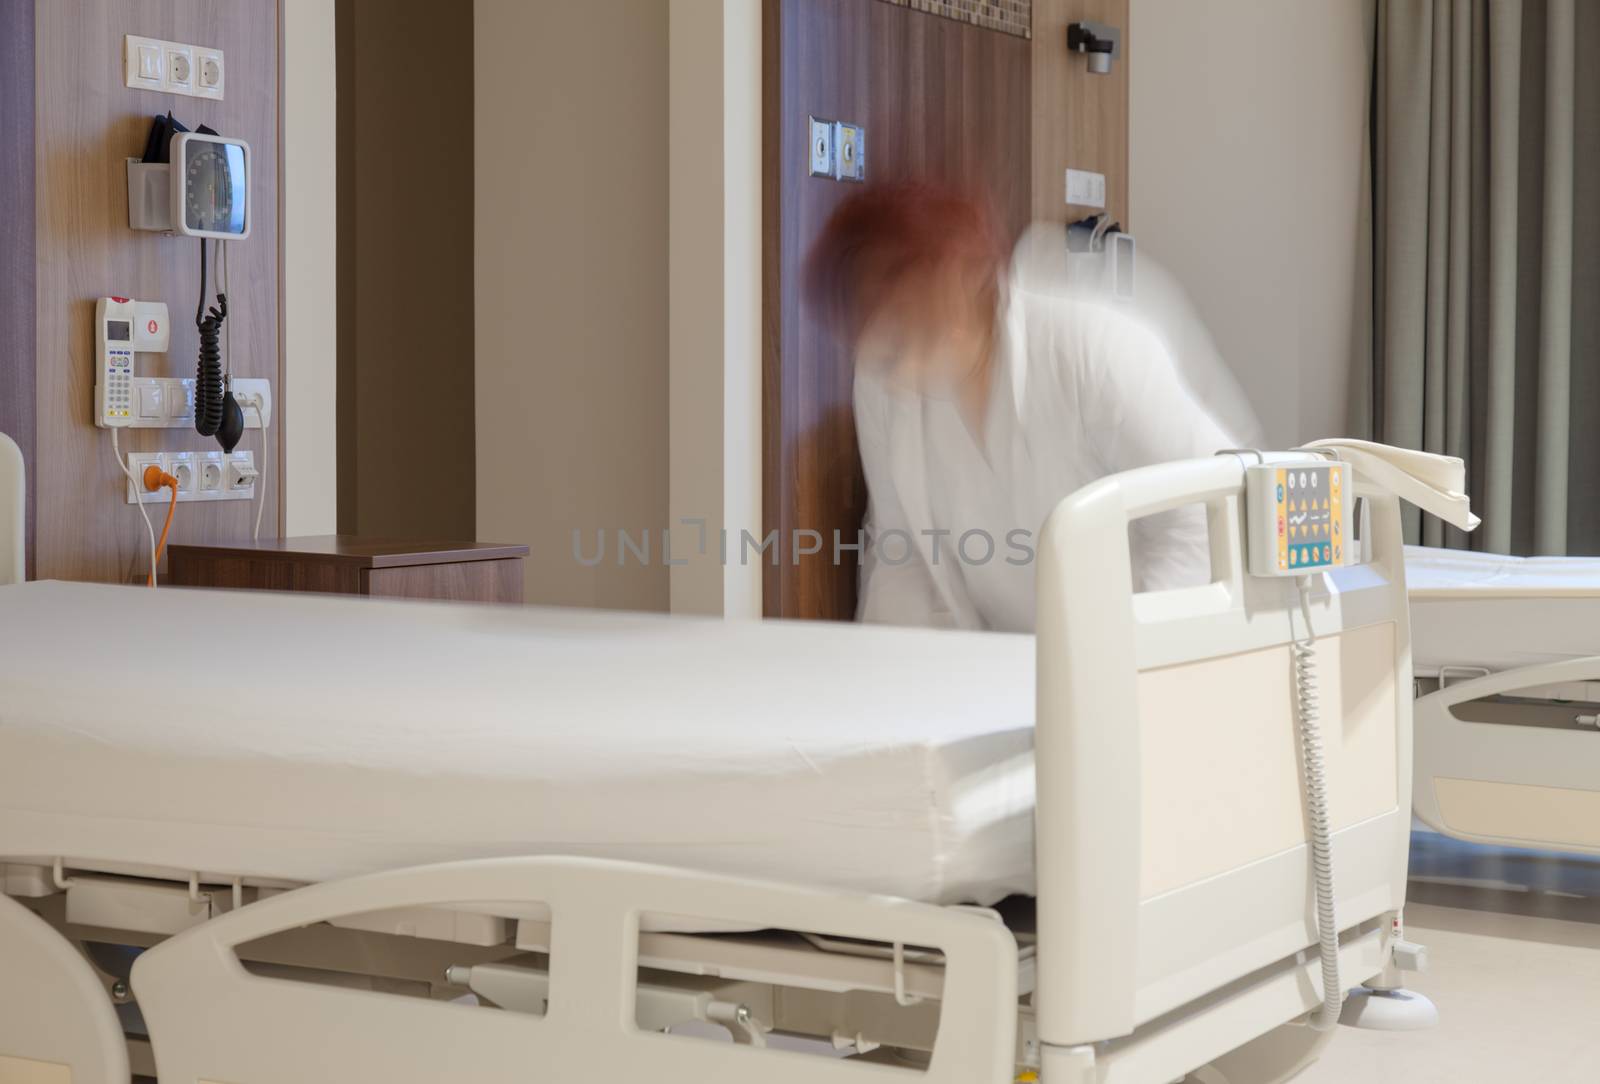 Hospital Room Bed by vilevi